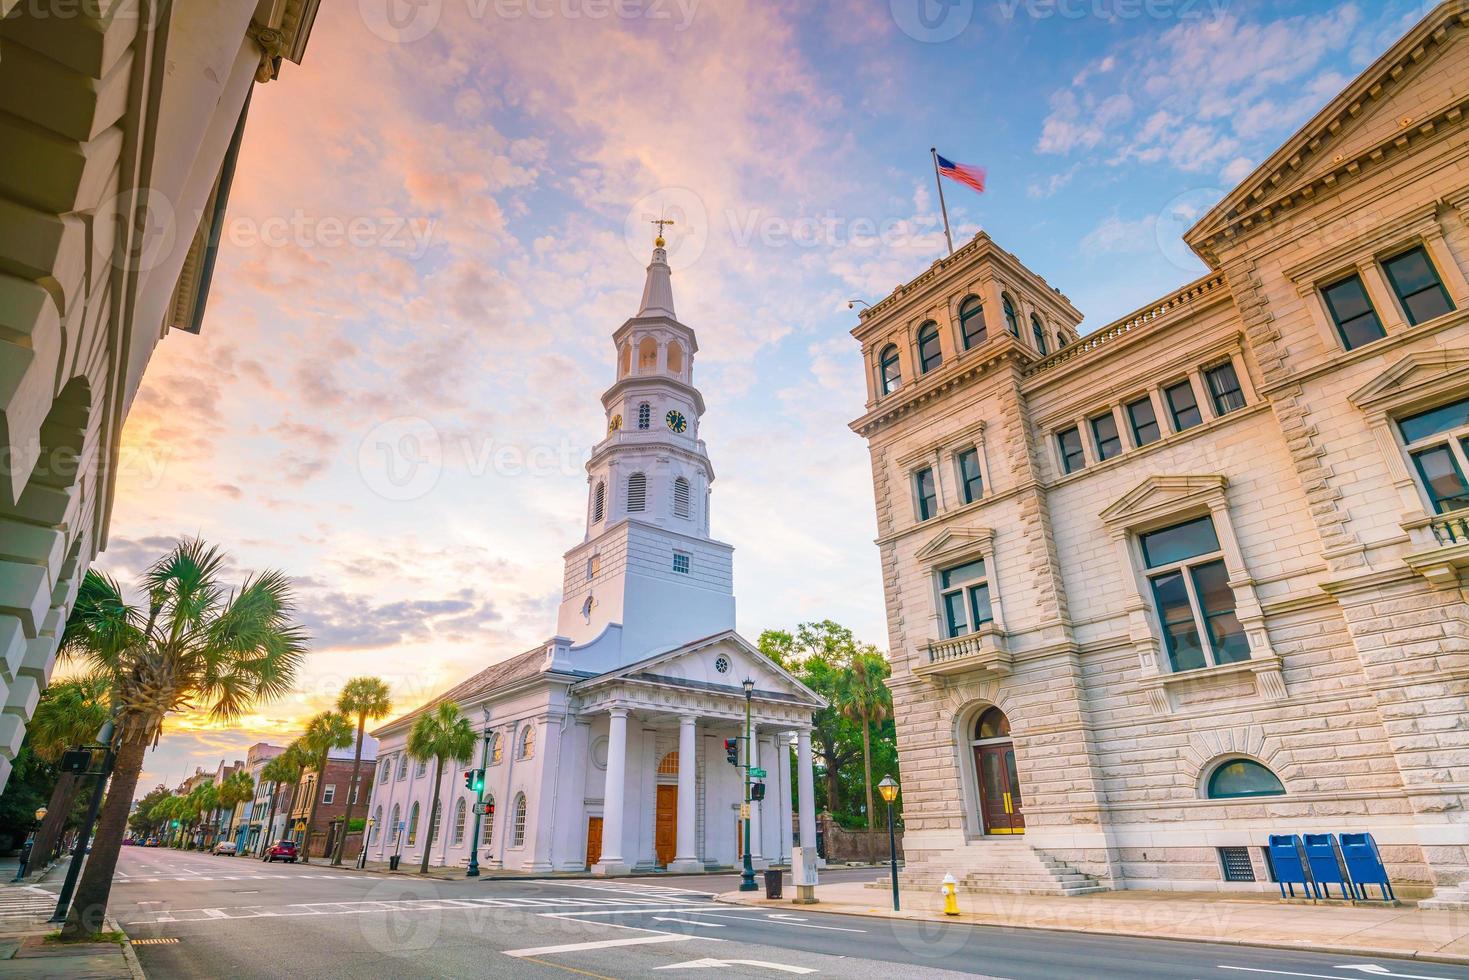 Charleston, South Carolina, Verenigde Staten foto